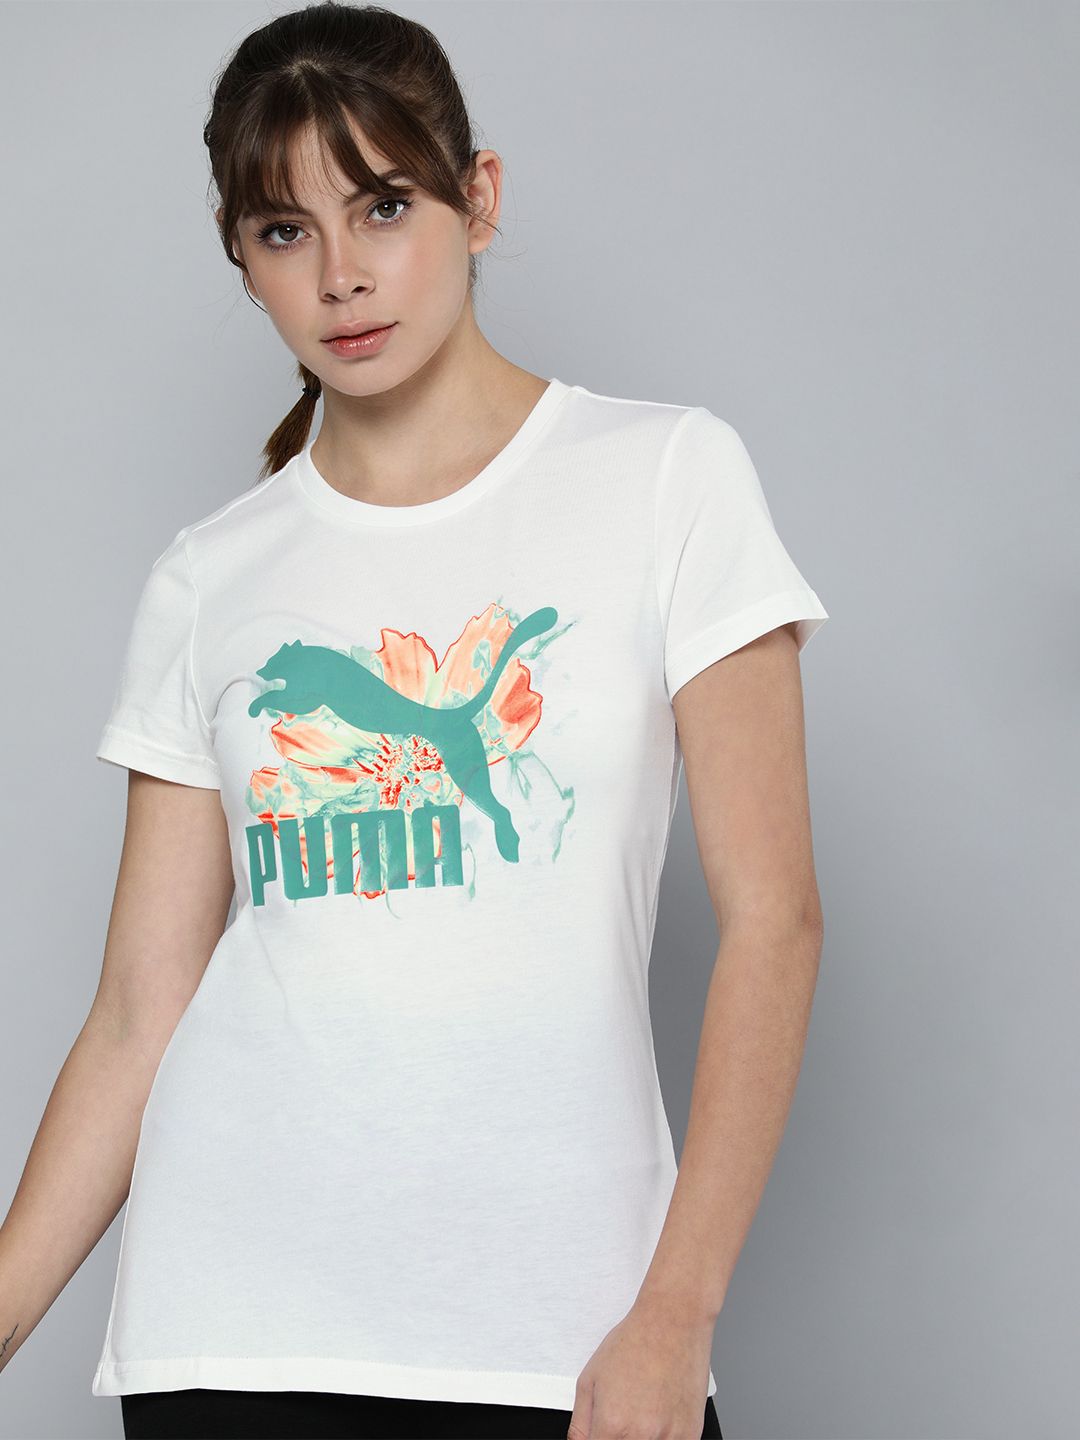 Puma Women White Graphic Printed Round-Neck Pure Cotton T-shirt Price in India